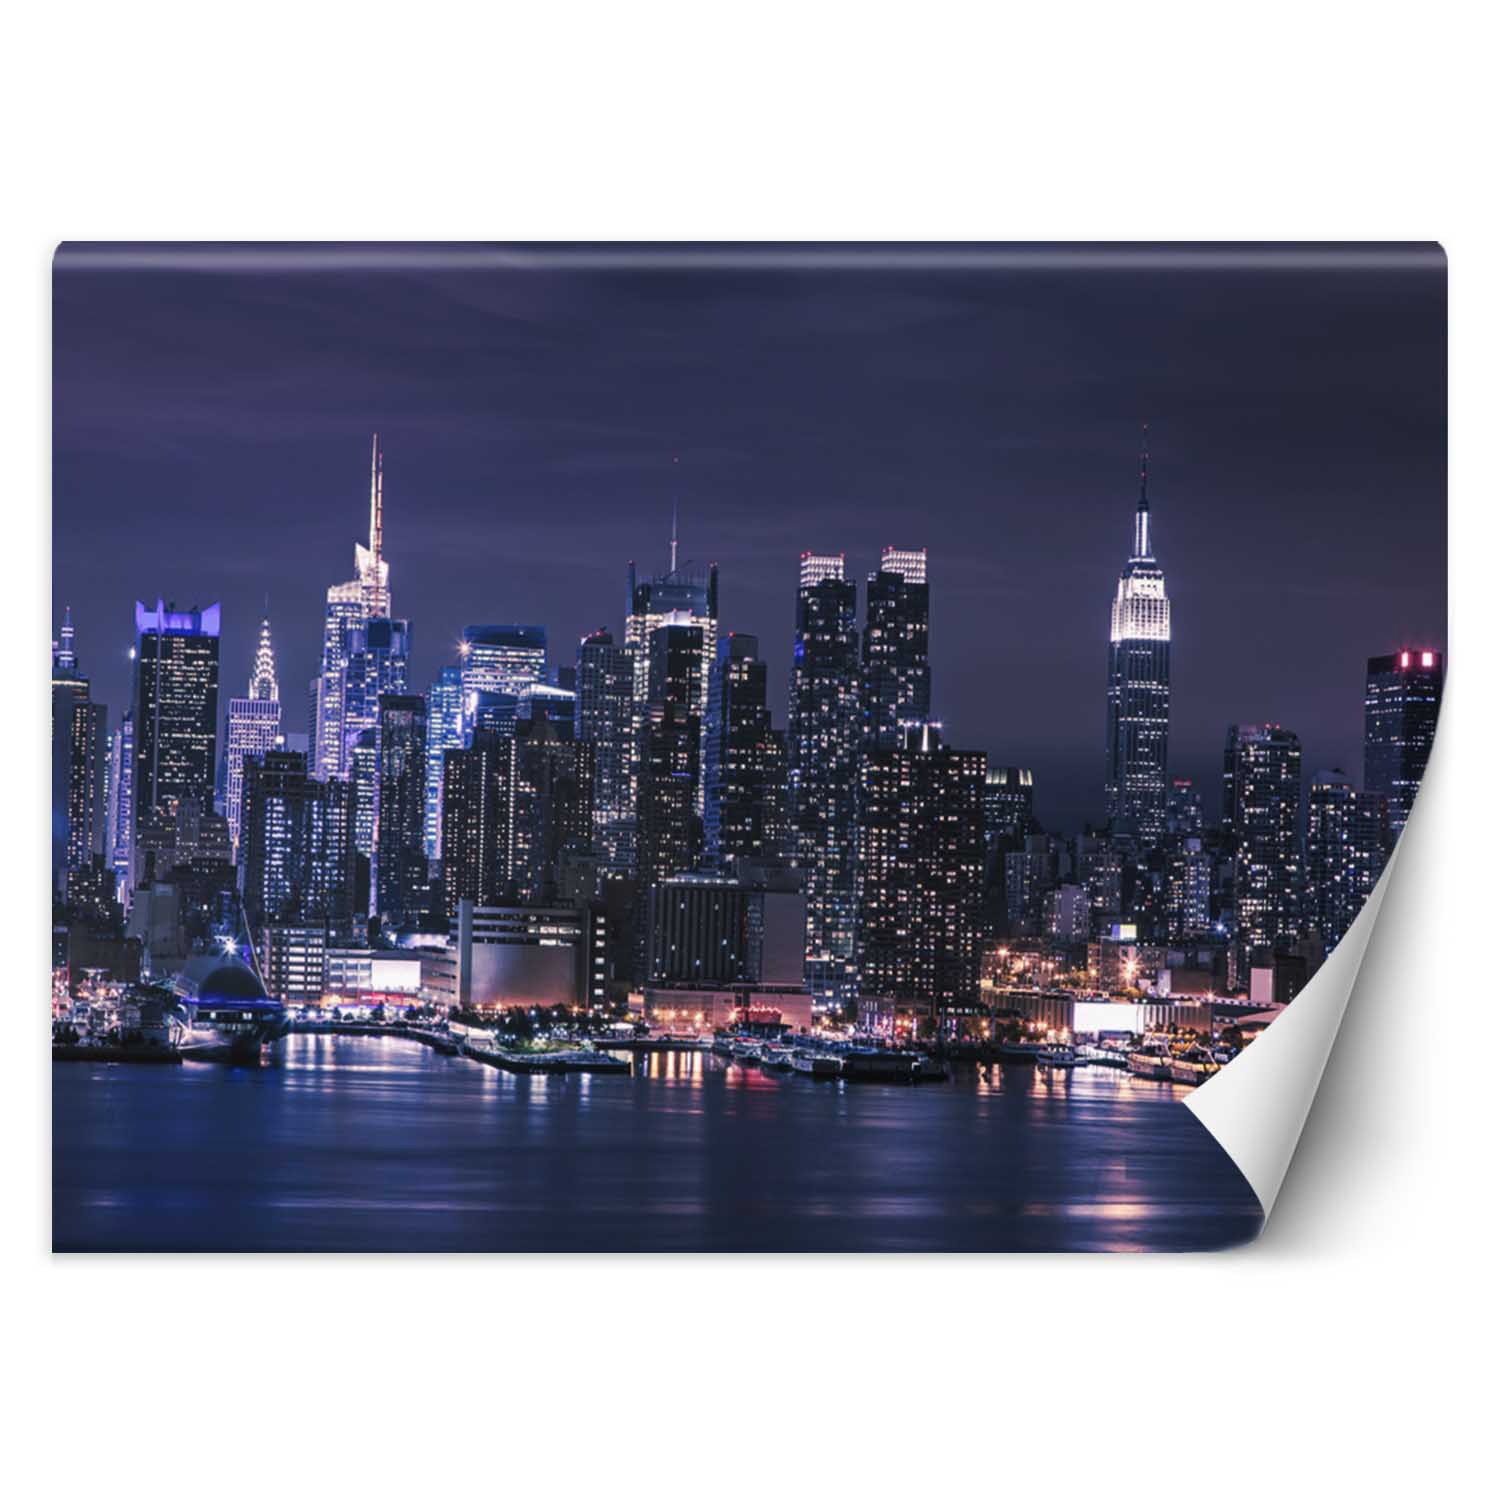 Trend24 – Behang – New York ‘S Nachts – Vliesbehang – Fotobehang – Behang Woonkamer – 400x280x2 cm – Incl. behanglijm